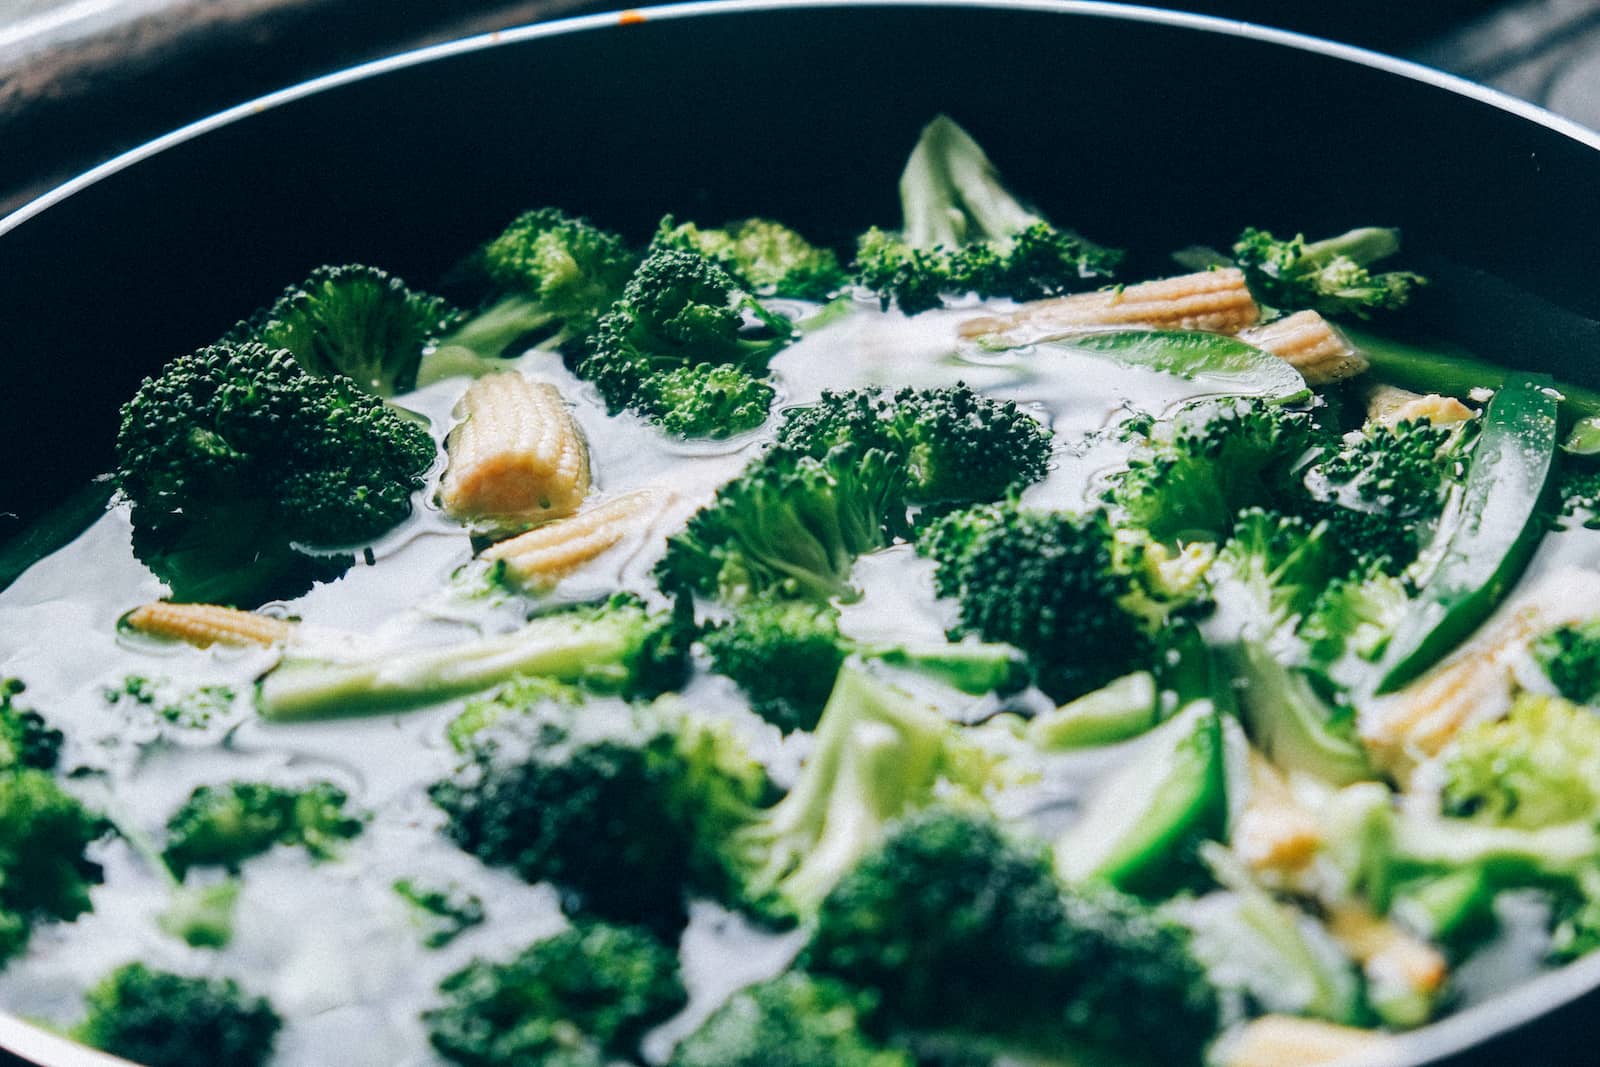 A close-up of broccoli soup